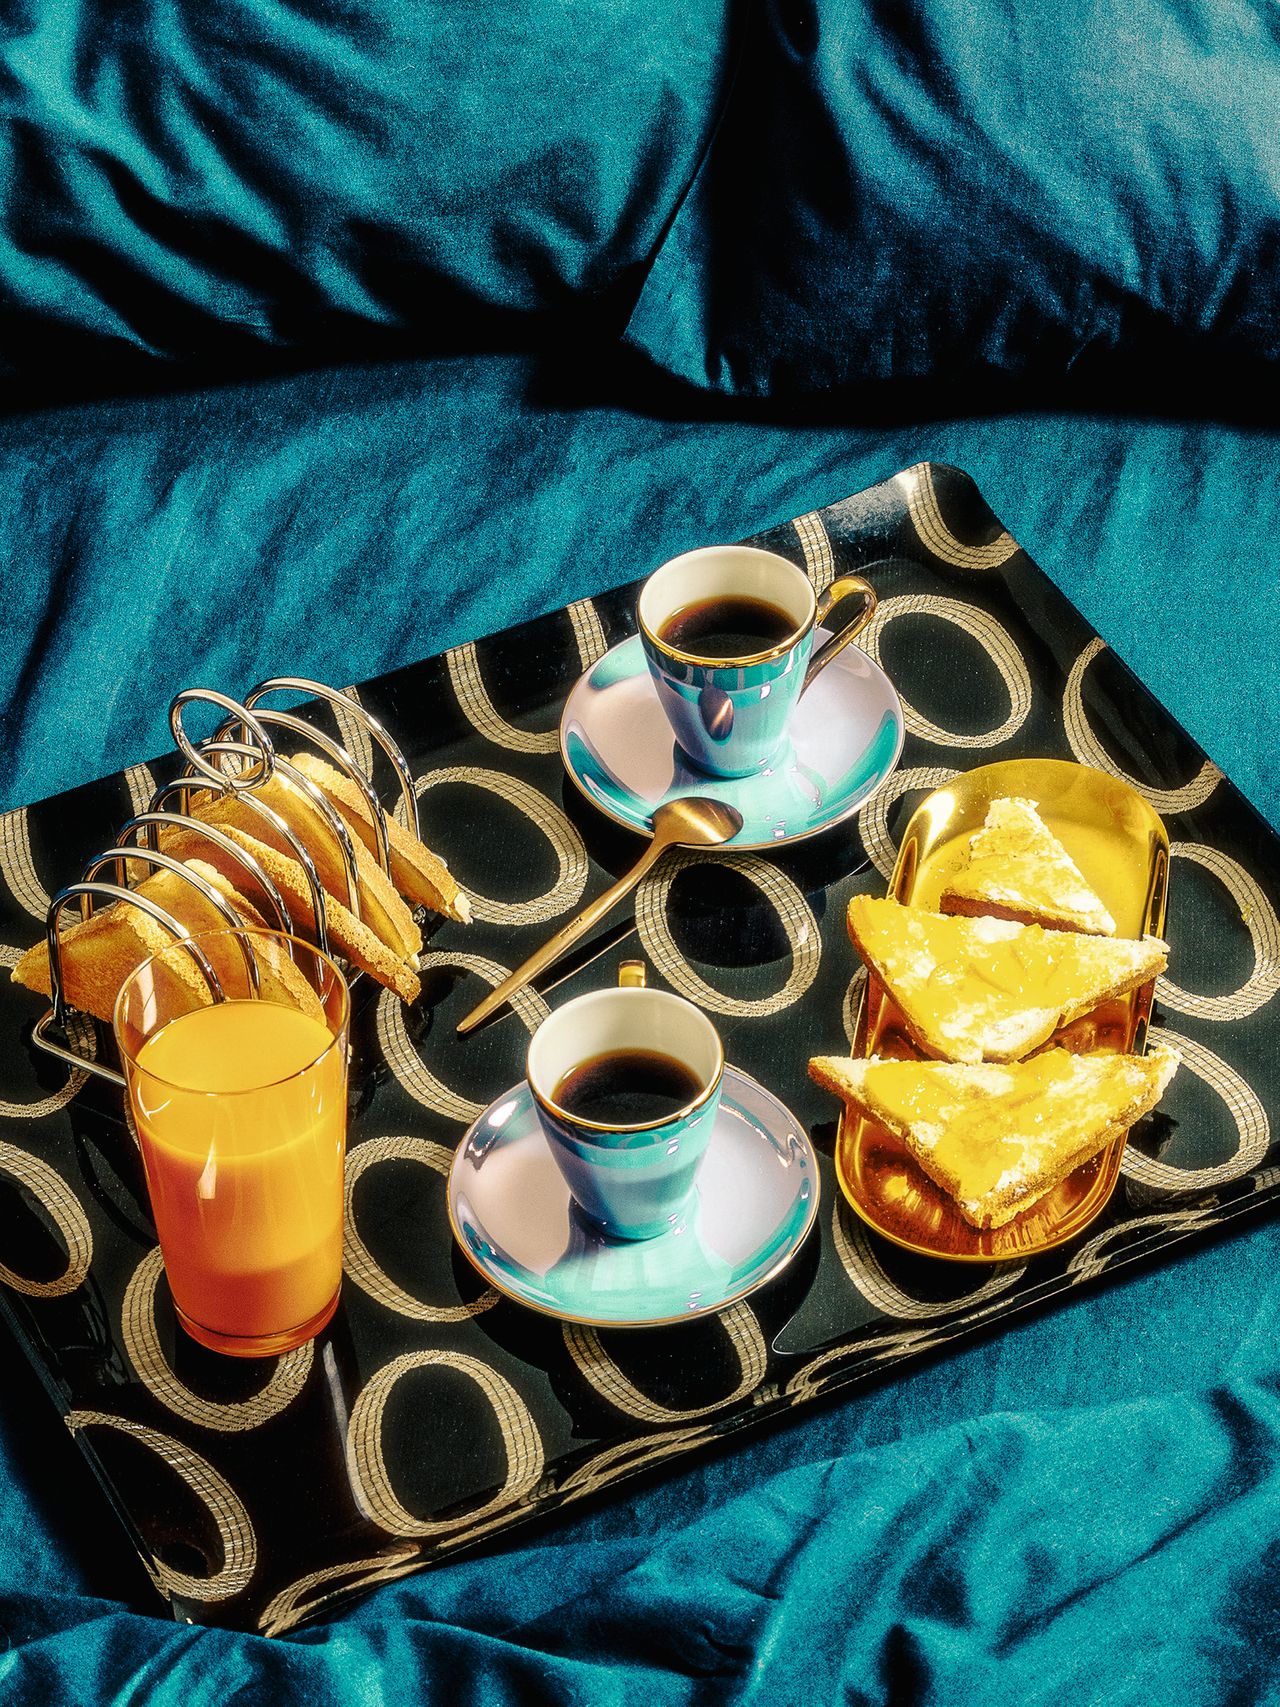 Warum Kaffee ans Bett so viel besser schmeckt - SZ Magazin